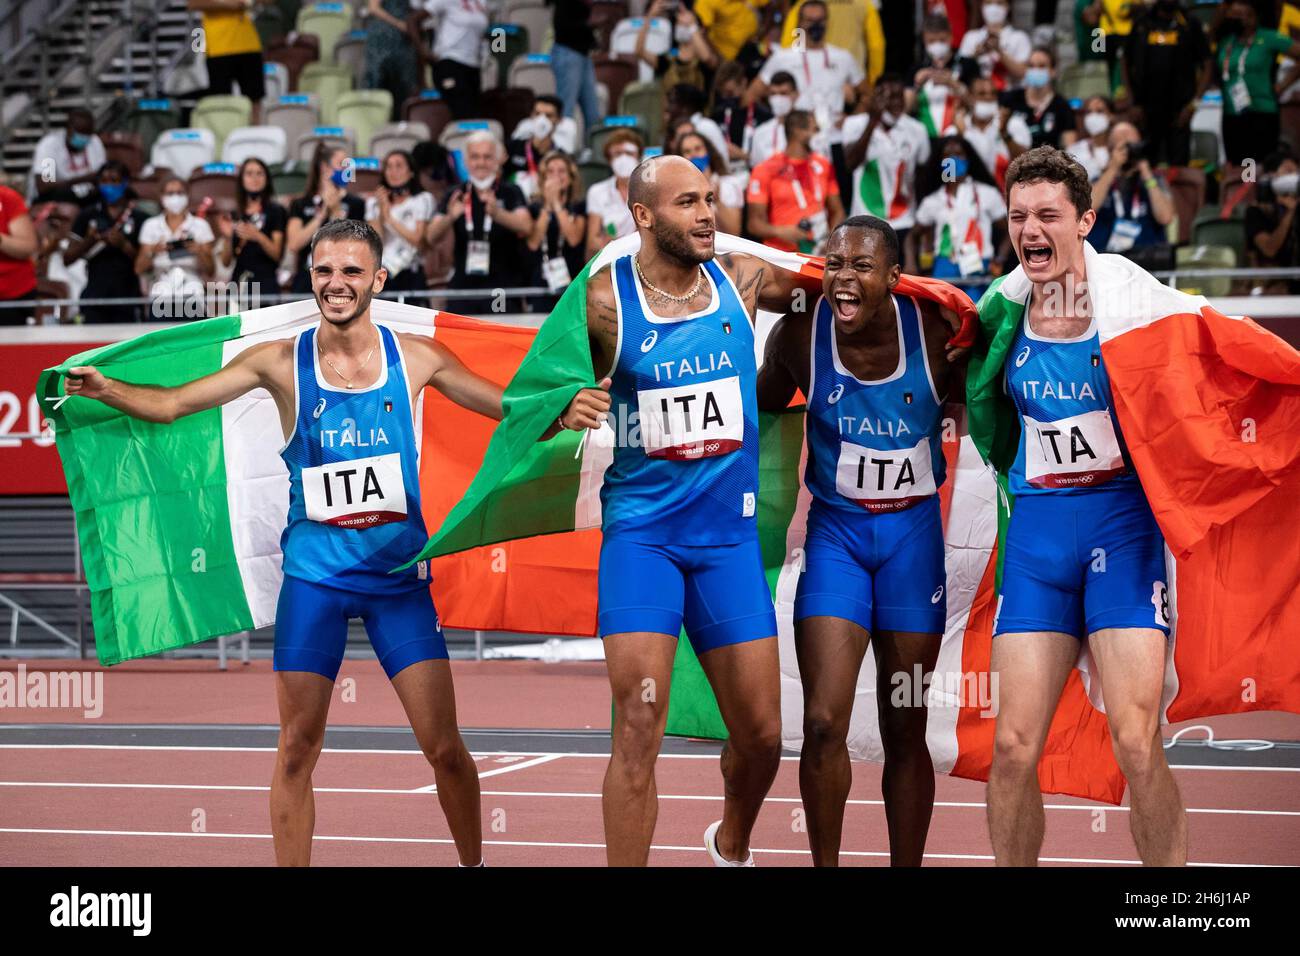 The Italian 4x100m mens team win Olympic Gold at the Tokyo 2020 Olympics. Stock Photo